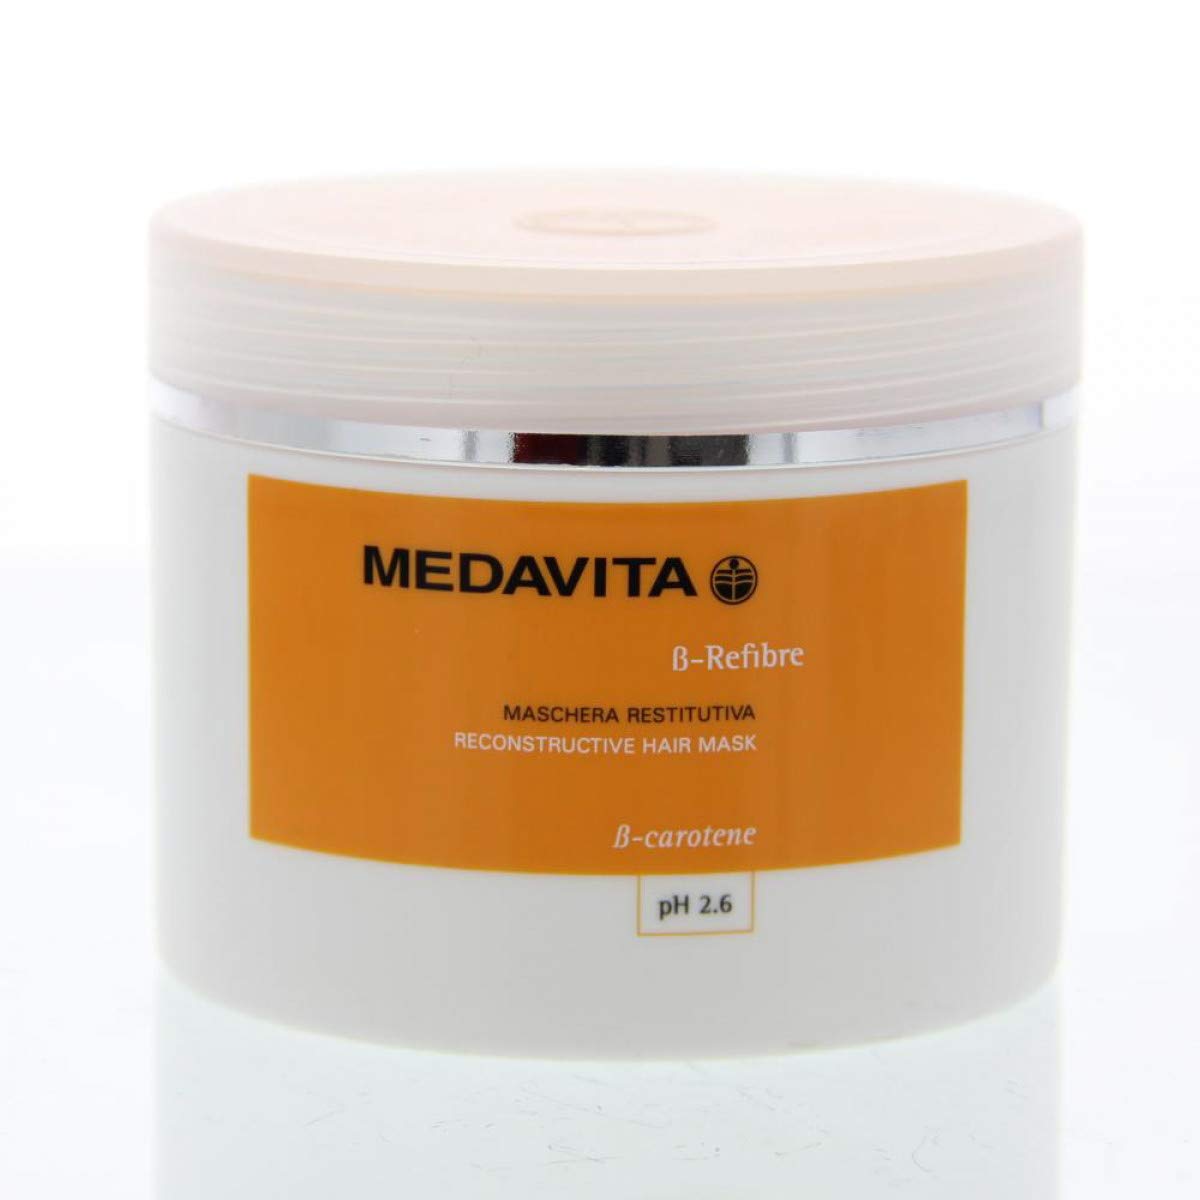 MEDAVITA Refibre Reconstructive Hair Mask 500 ml